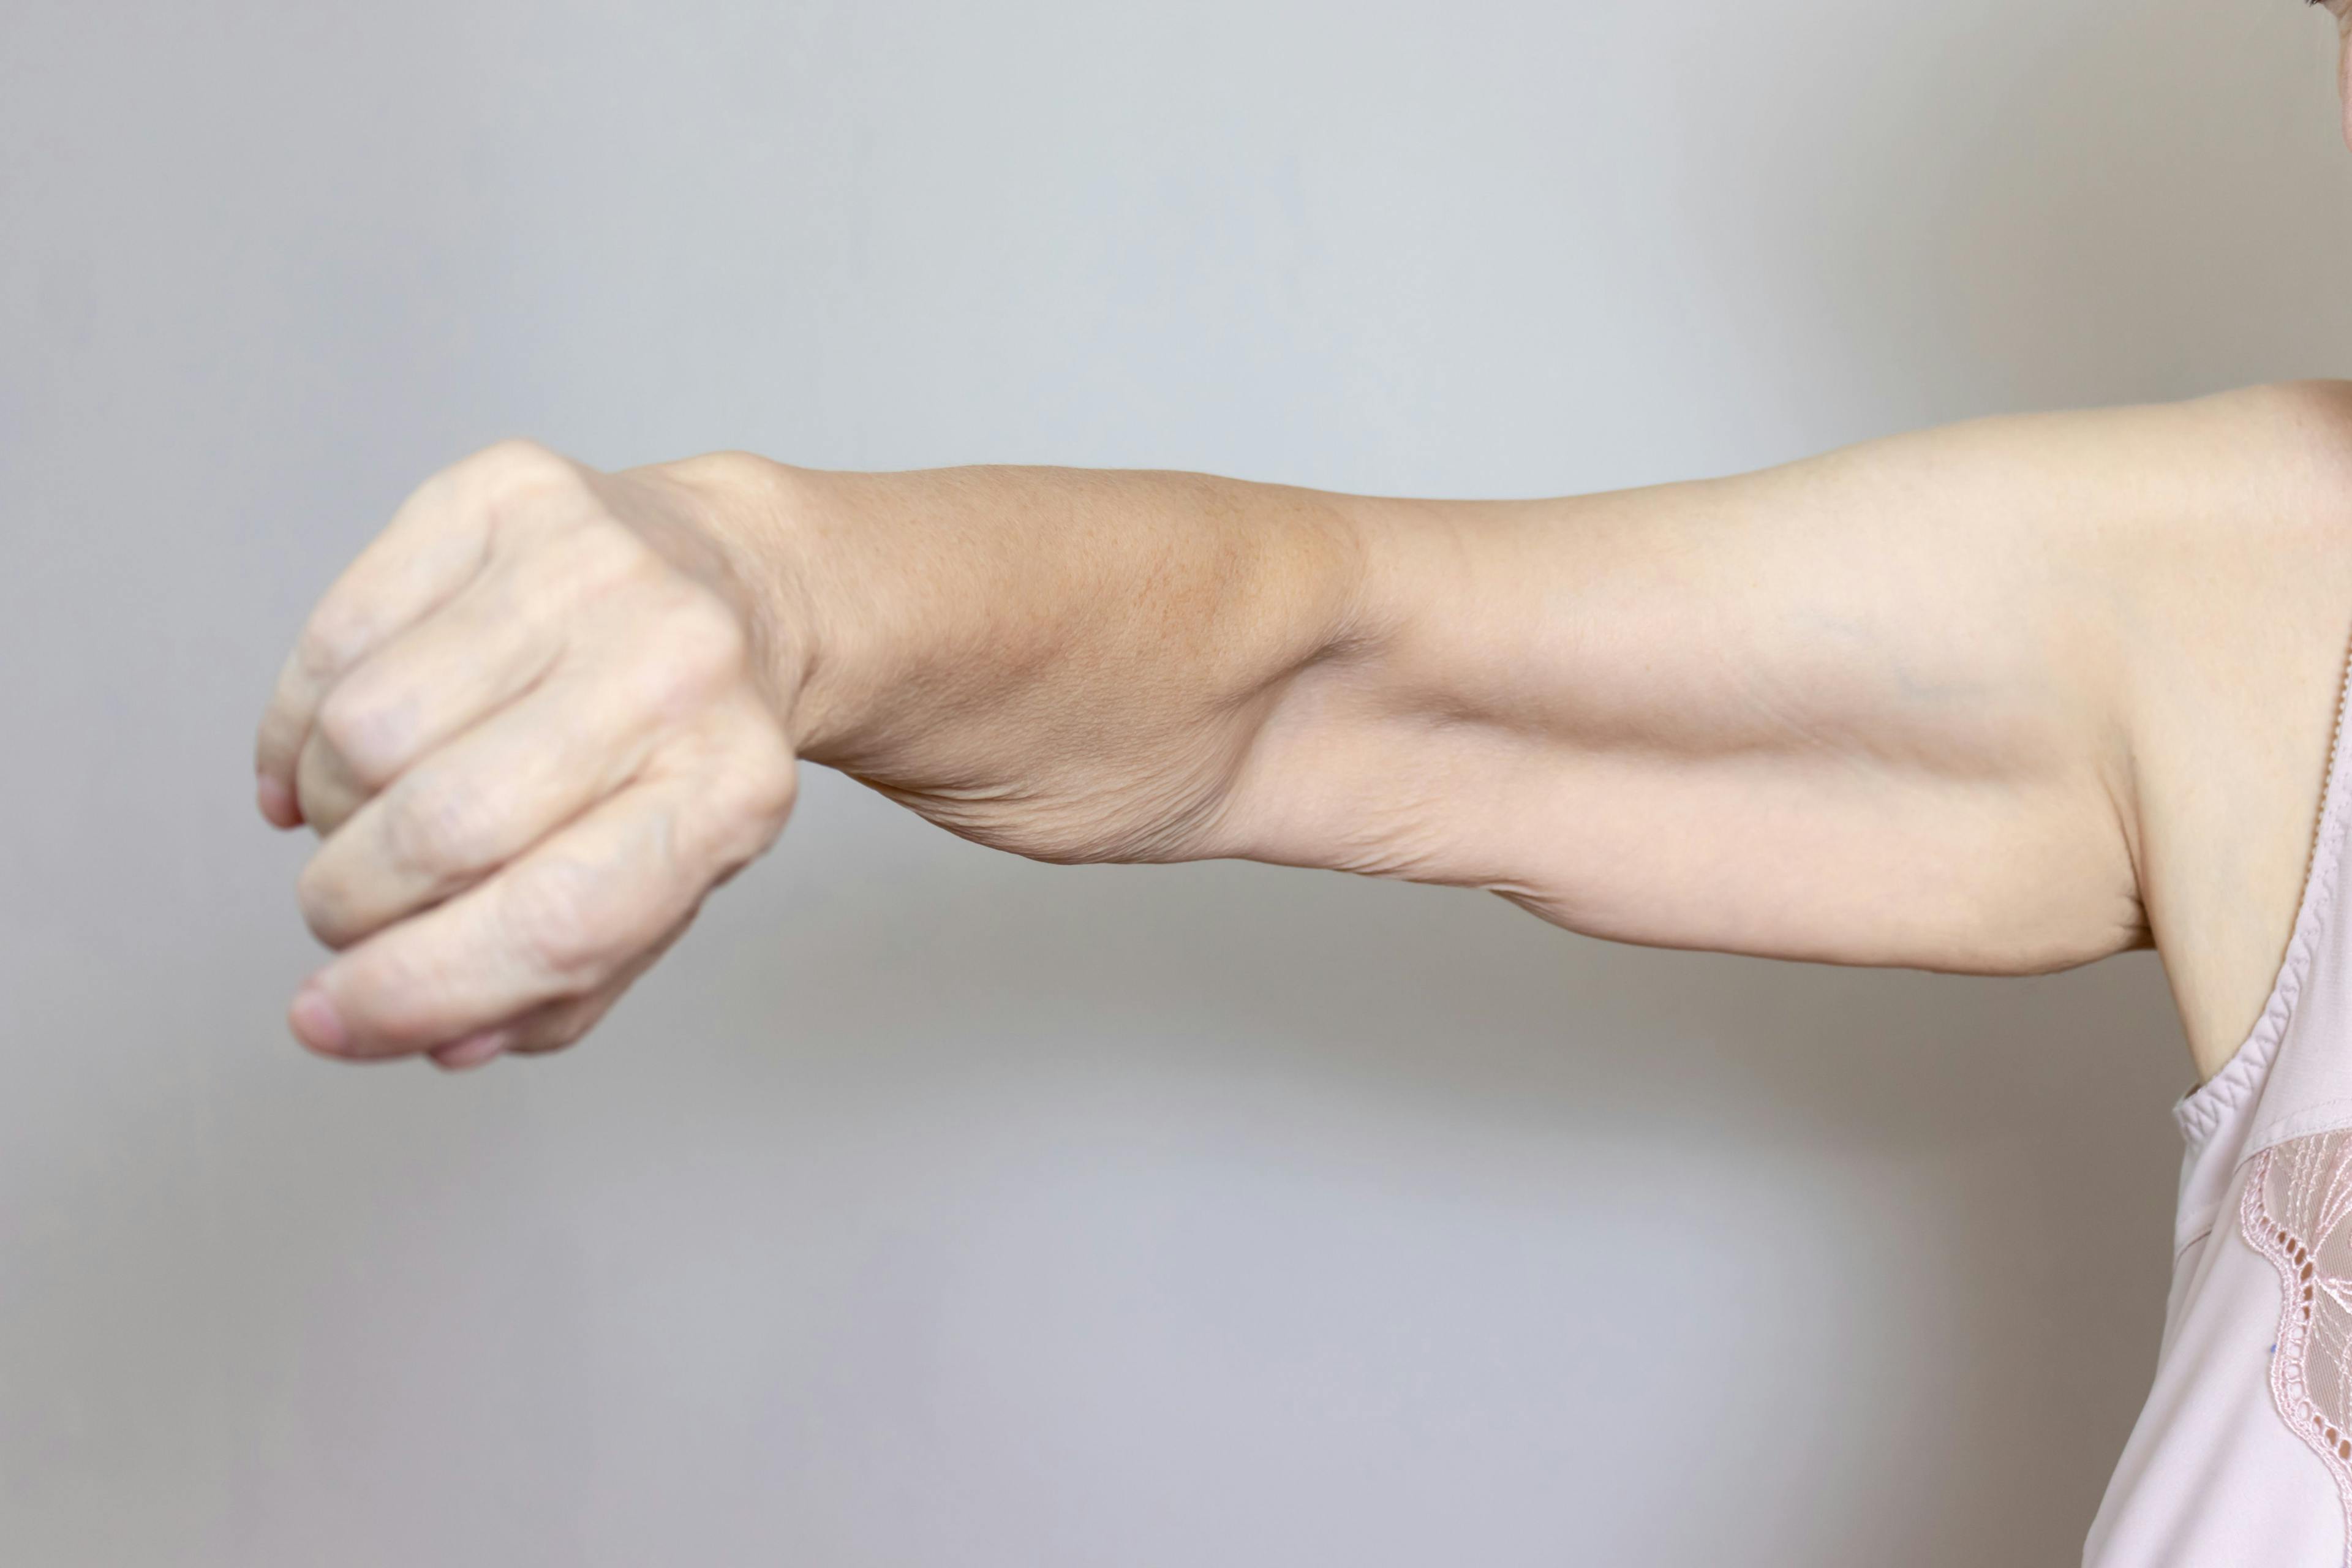 Single-Plane vs Double-Plane MFU-V for Upper Arm Skin Laxity